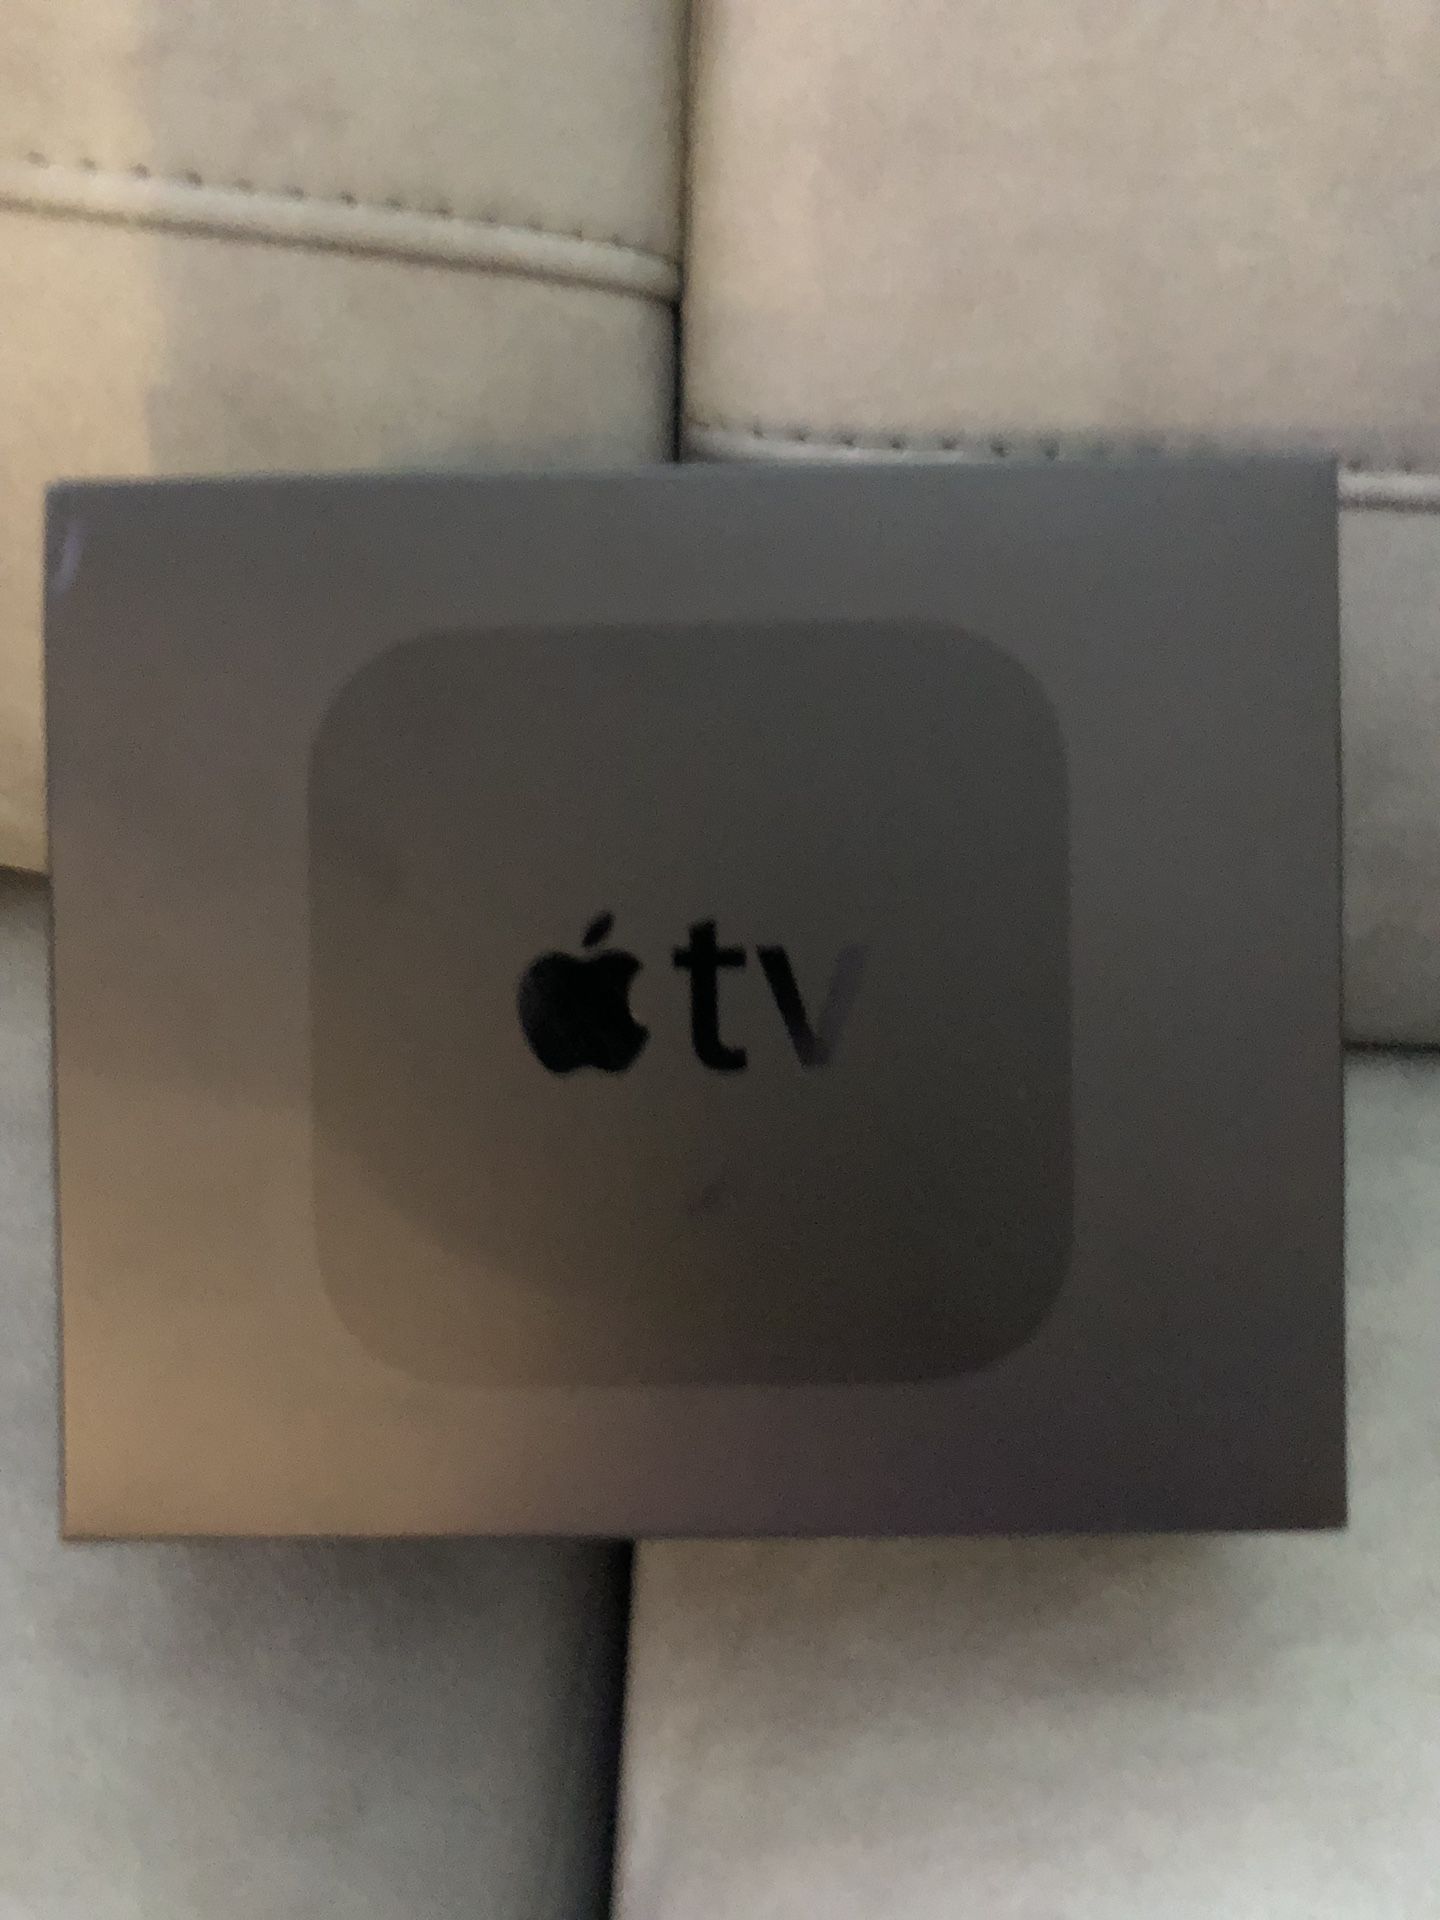 Apple TV 32gb